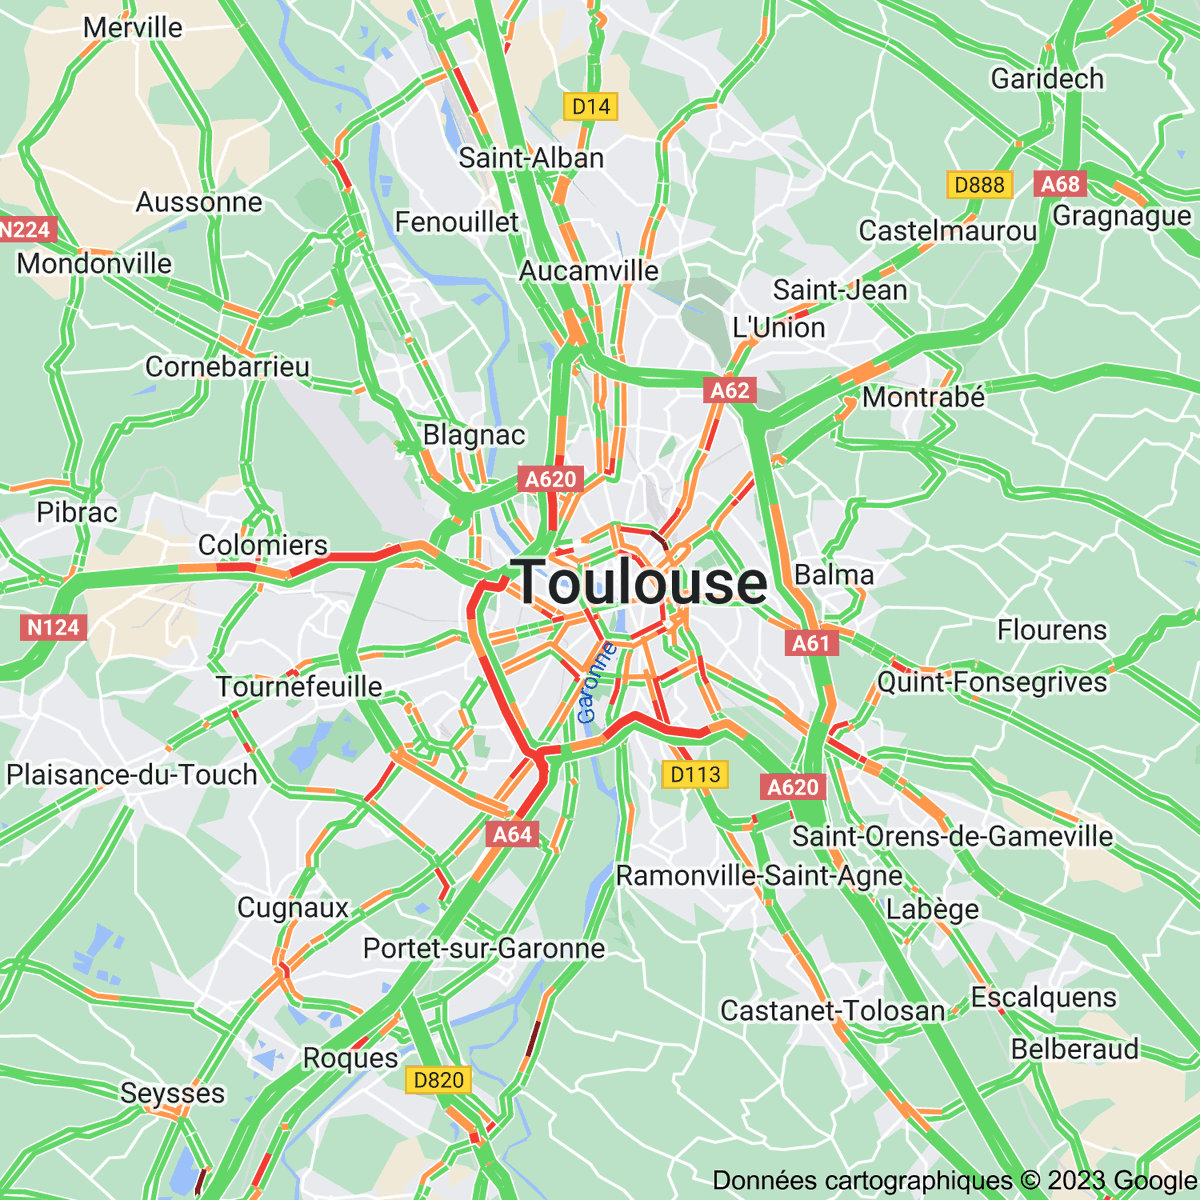 [FLASH 19:00] Trafic à Toulouse toulousetrafic.com #Toulouse #ToulousePeriph #InfoTrafic